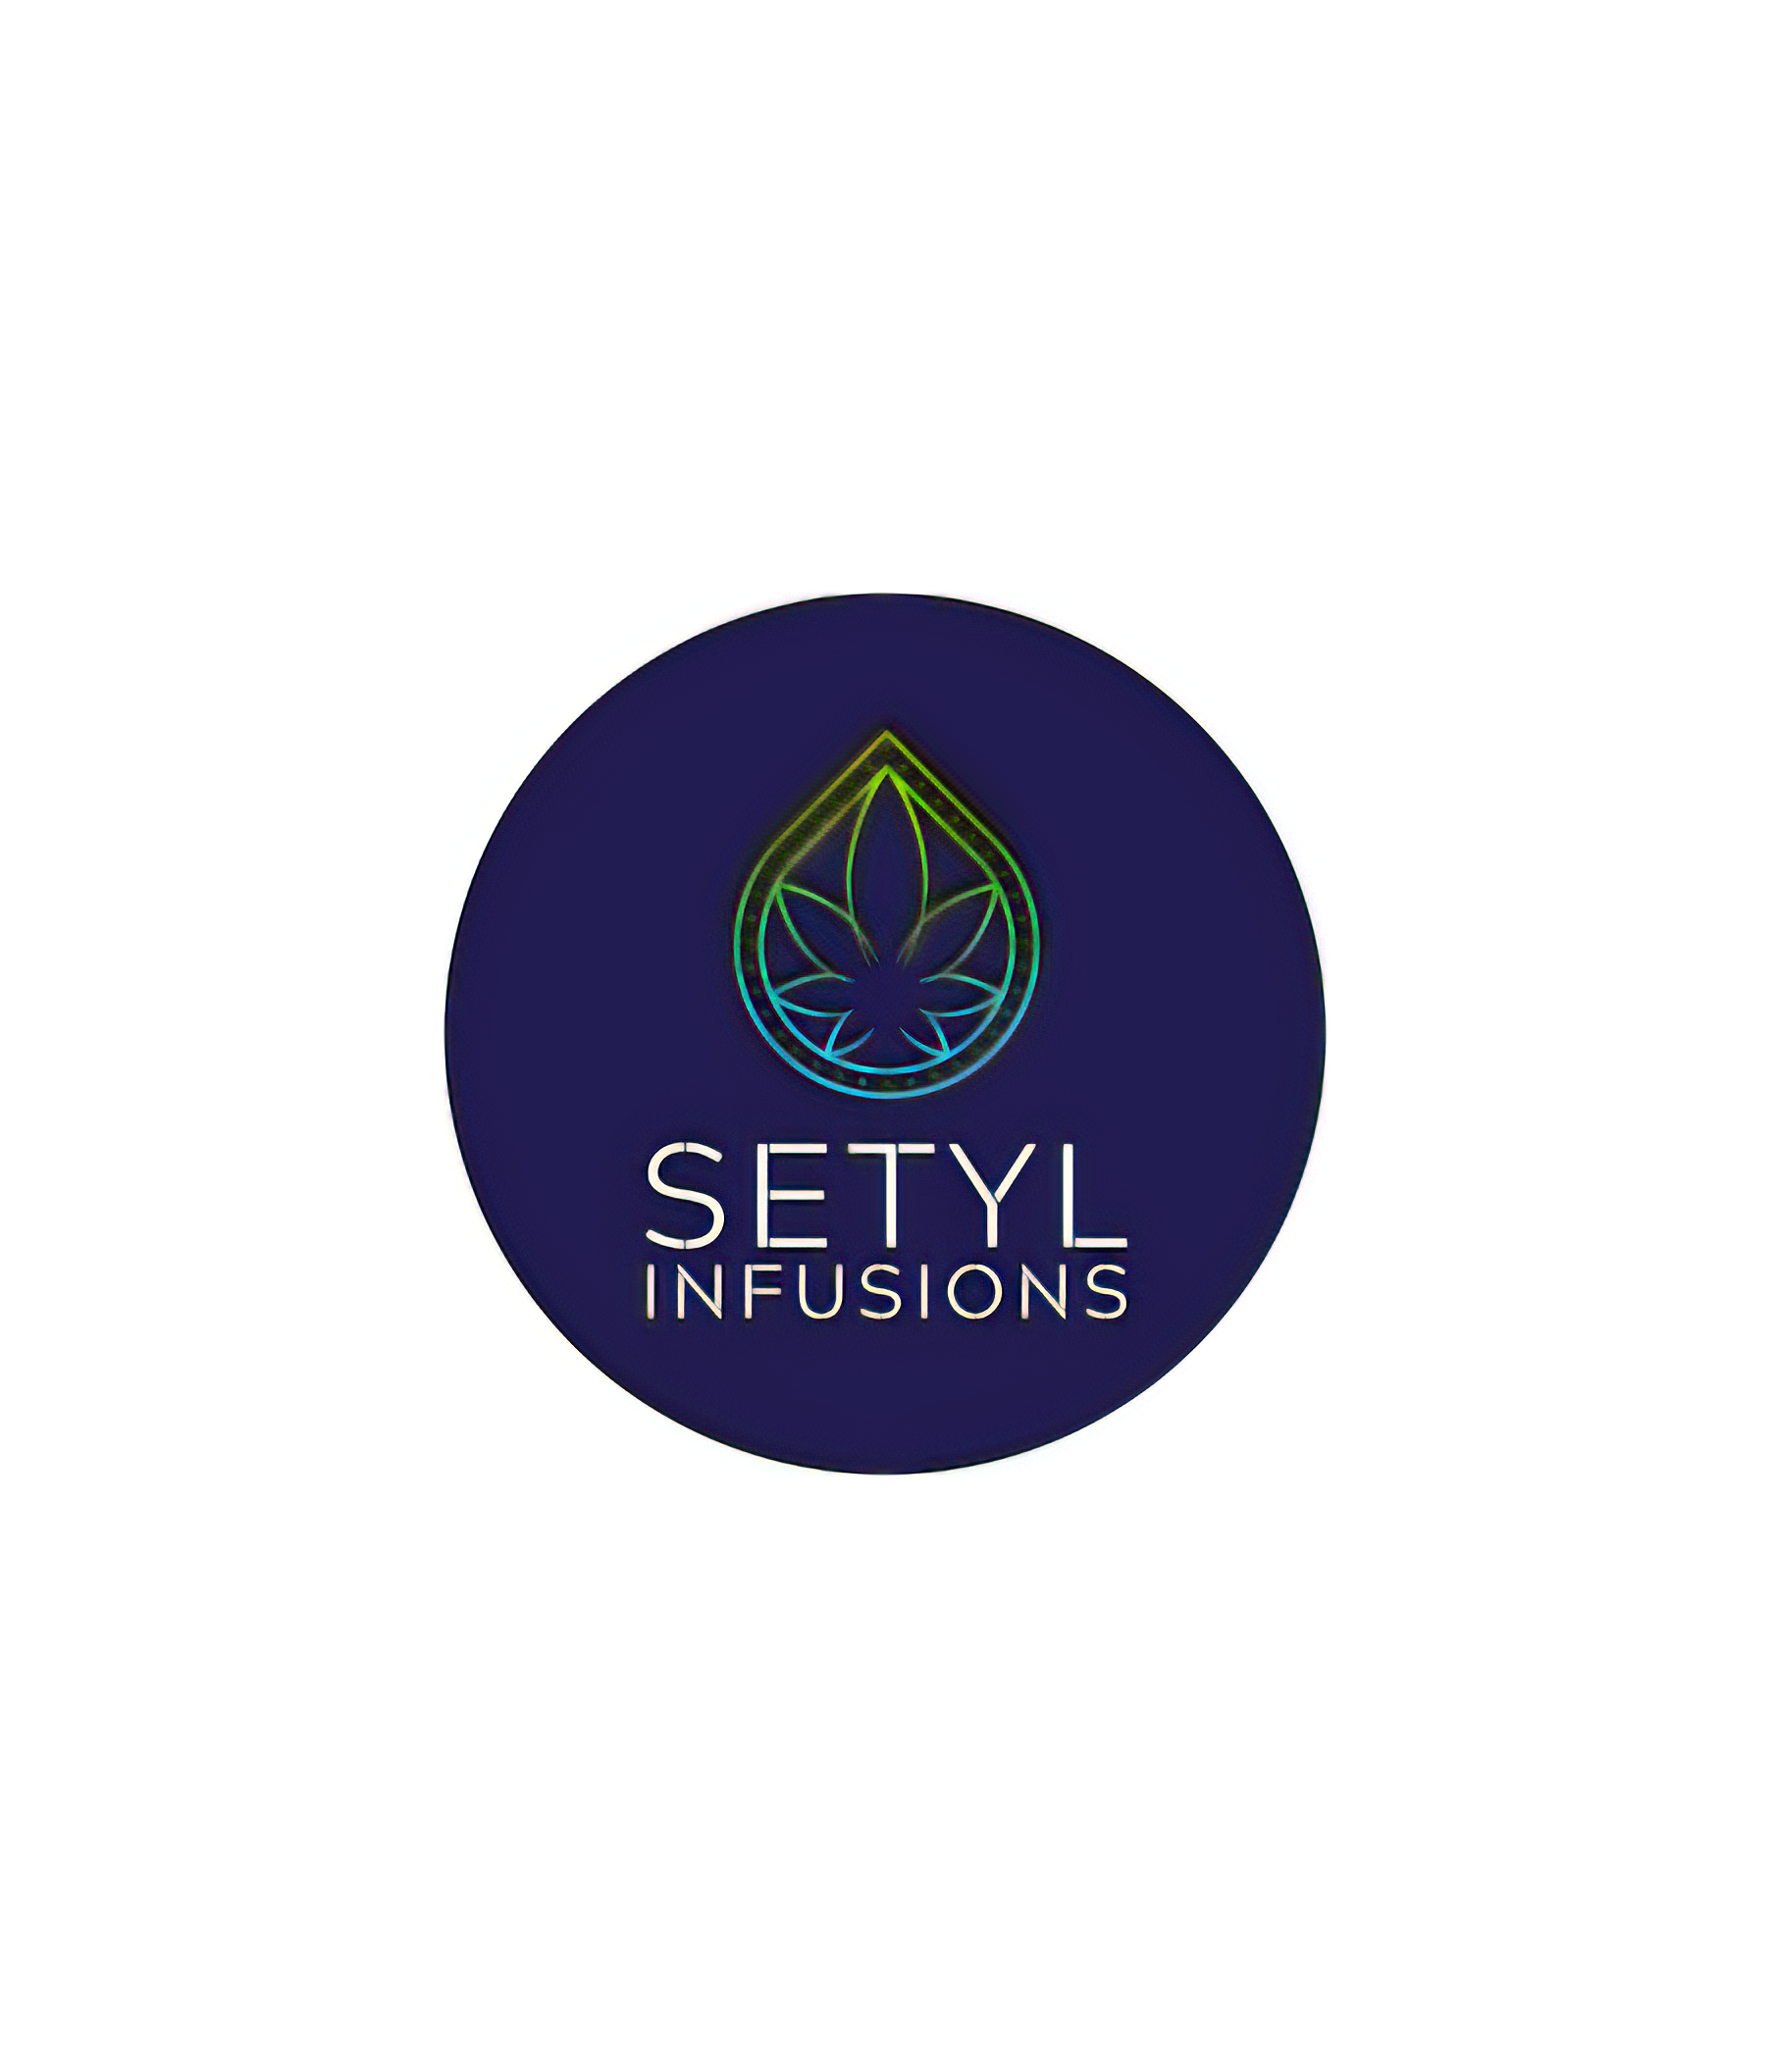 Setyl Infusions Ltd